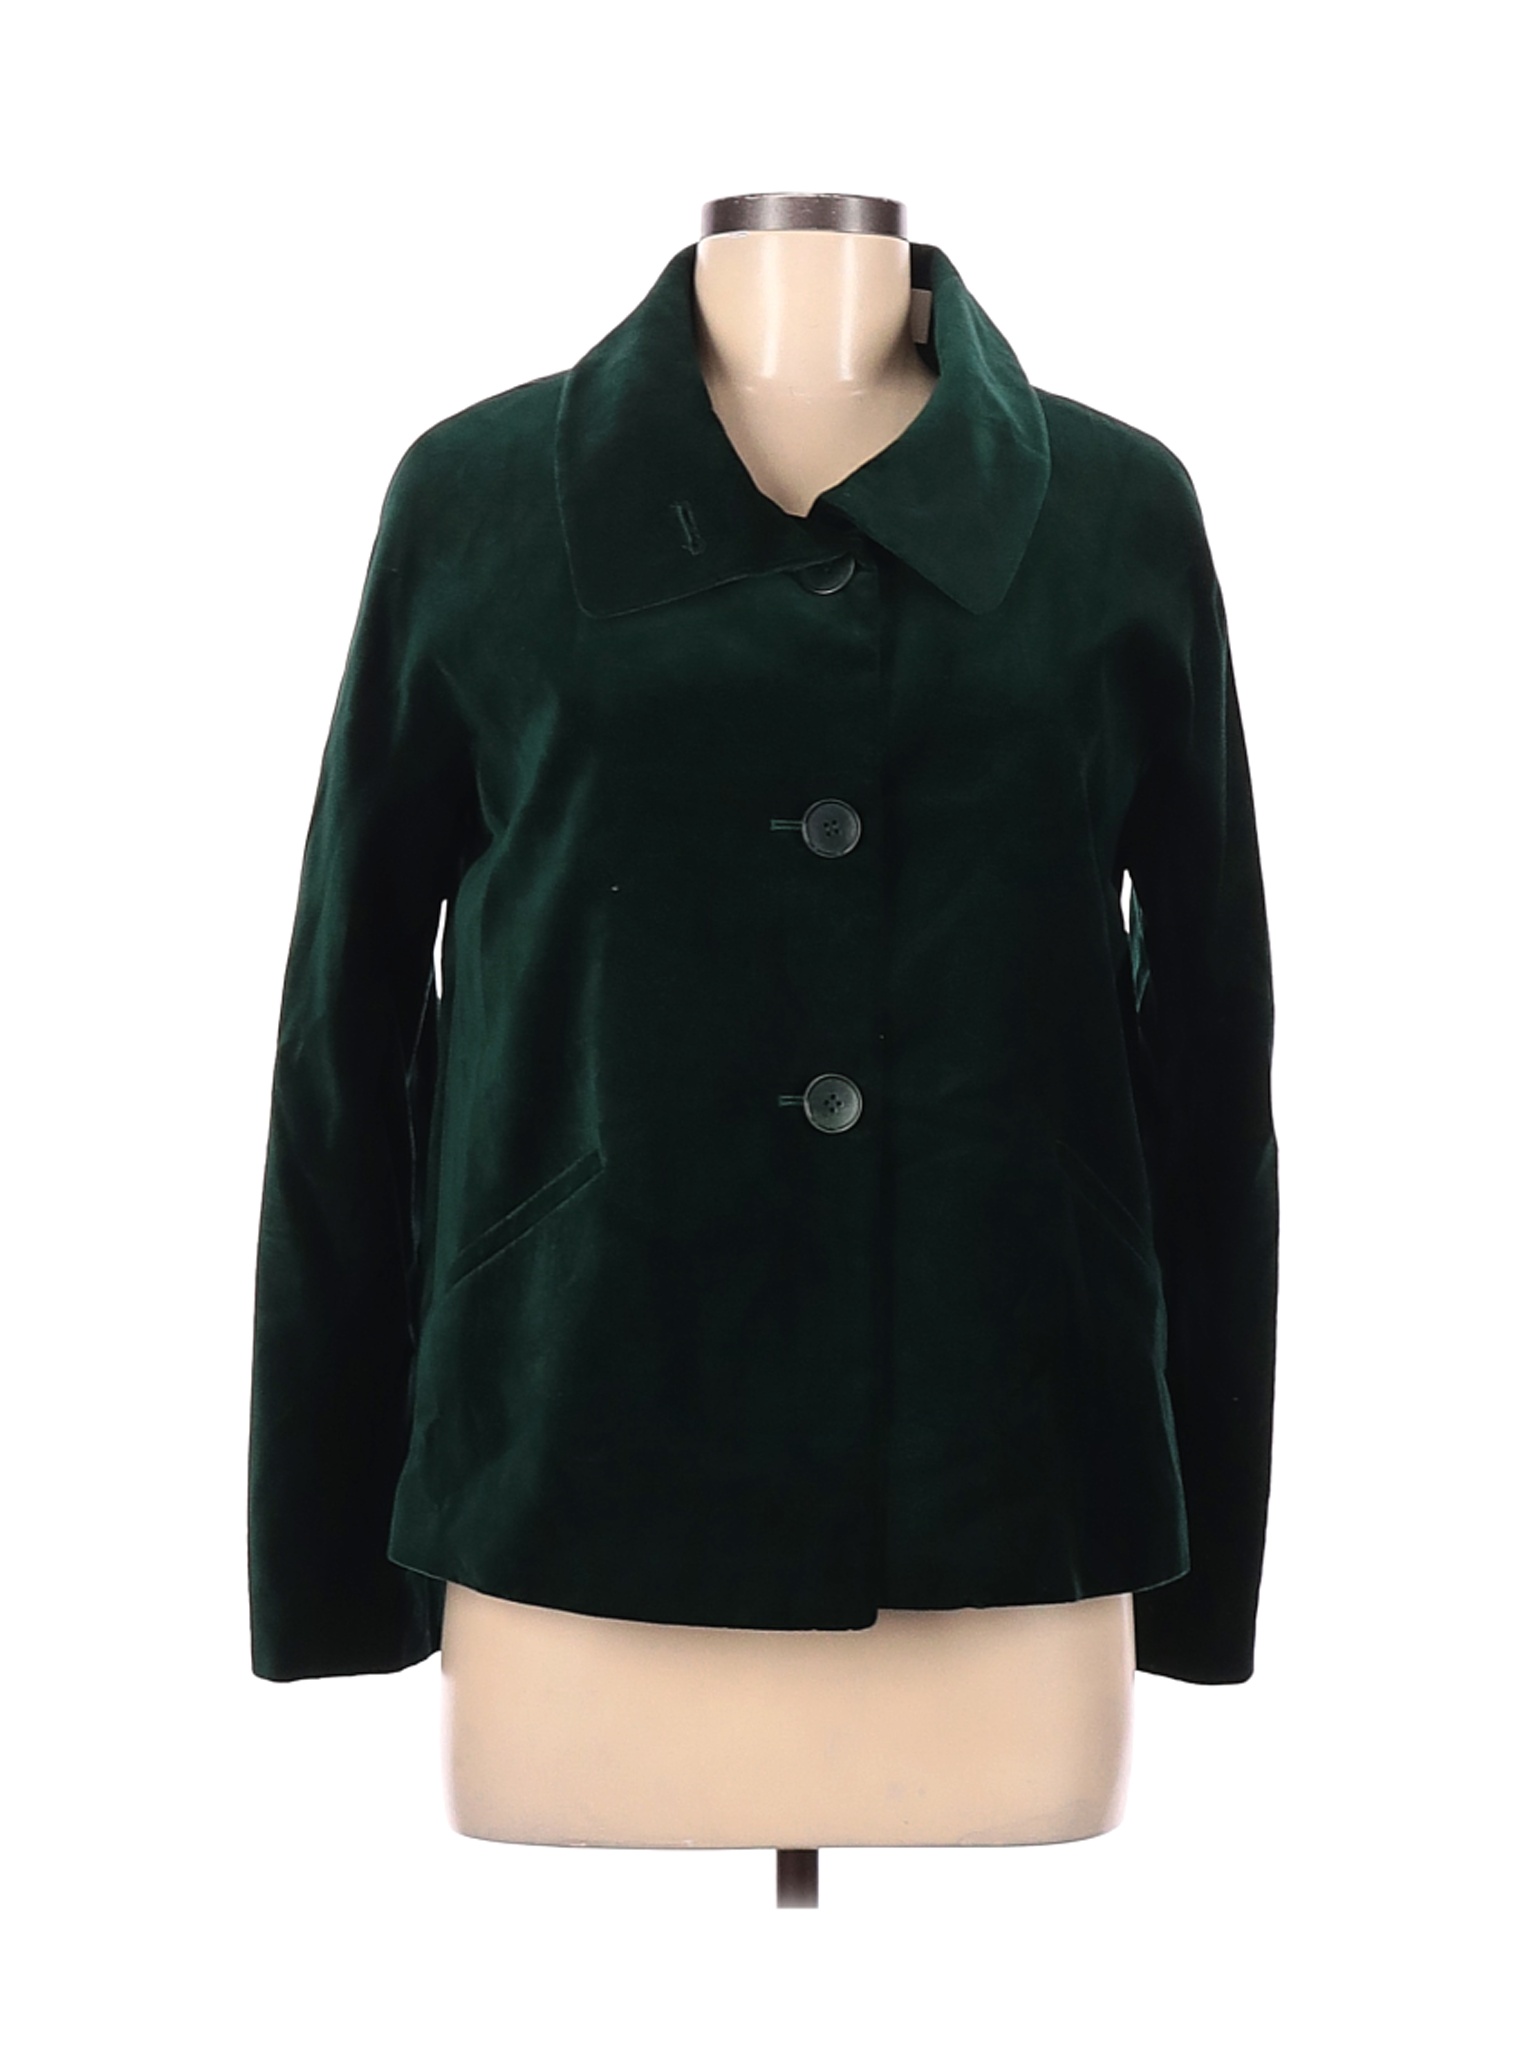 NWT Talbots Women Green Jacket 2 | eBay